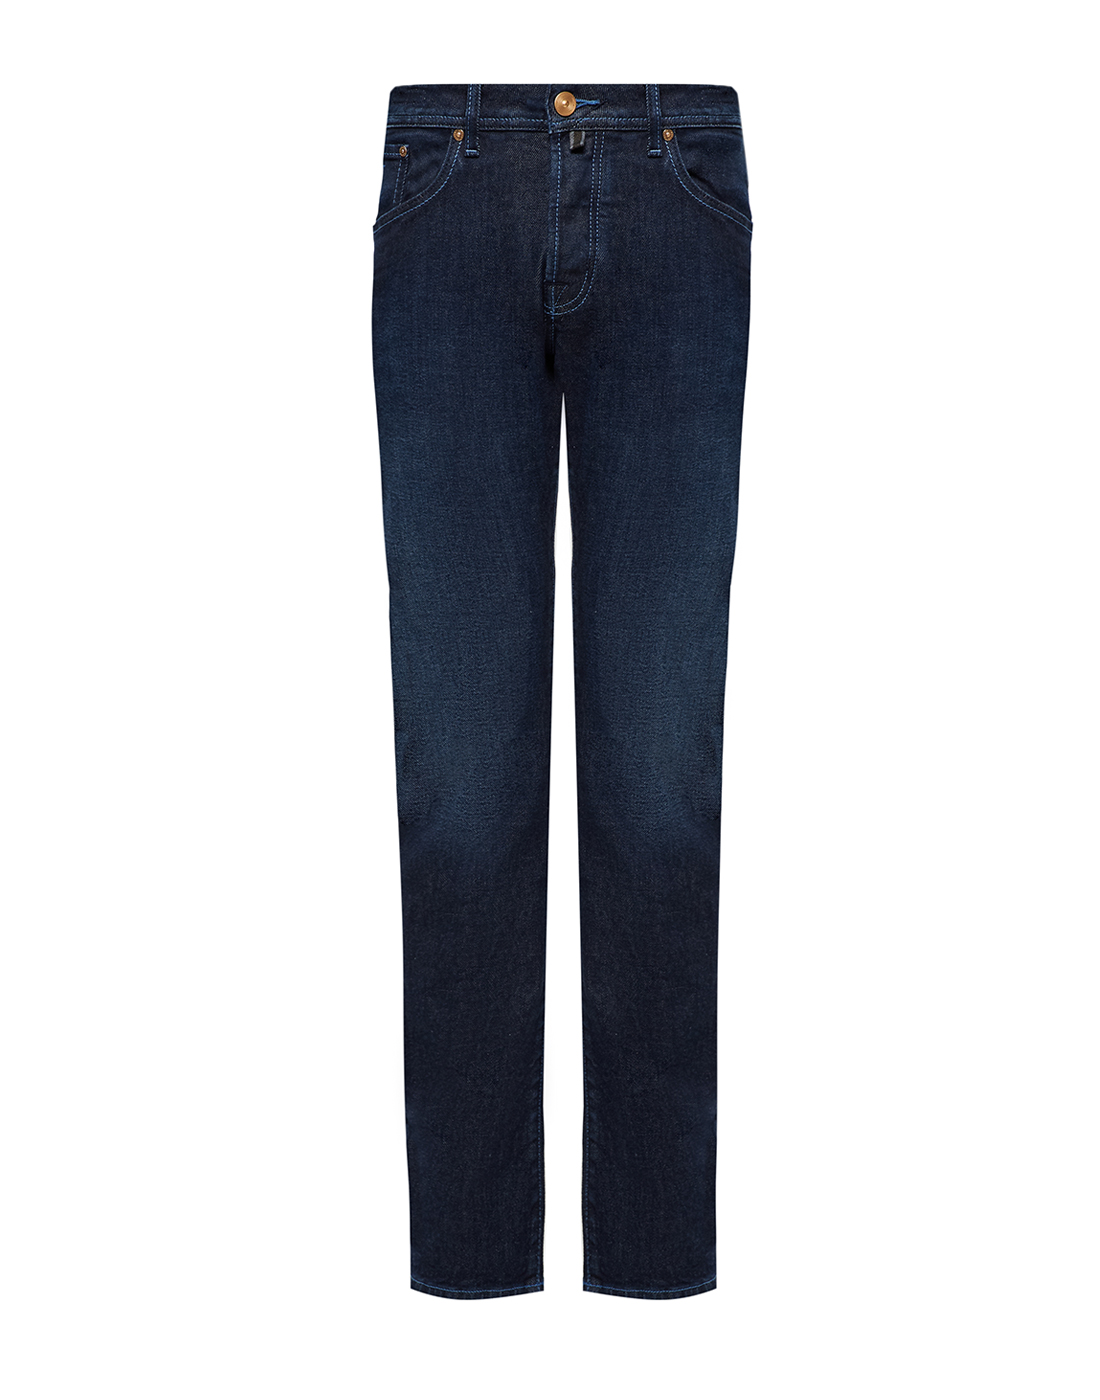 Мужские синие джинсы Jacob Cohen SS3585 074D-1